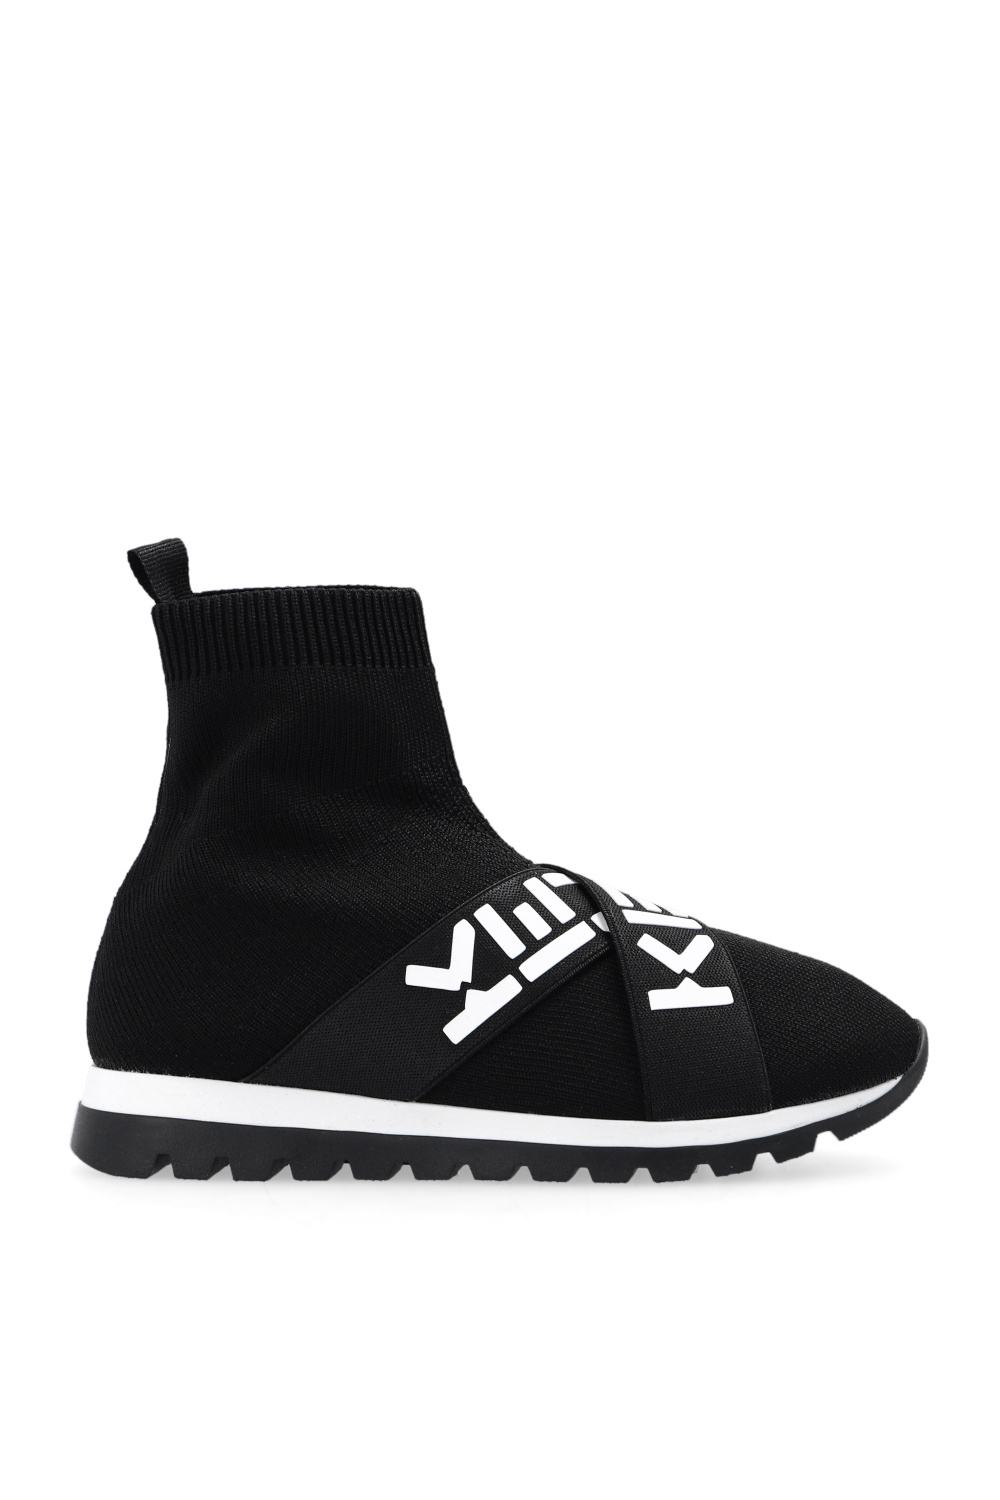 low-top Sock Gel-Quantum Kenzo StclaircomoShops sneakers - Bhutan Kids sneakers 180 -